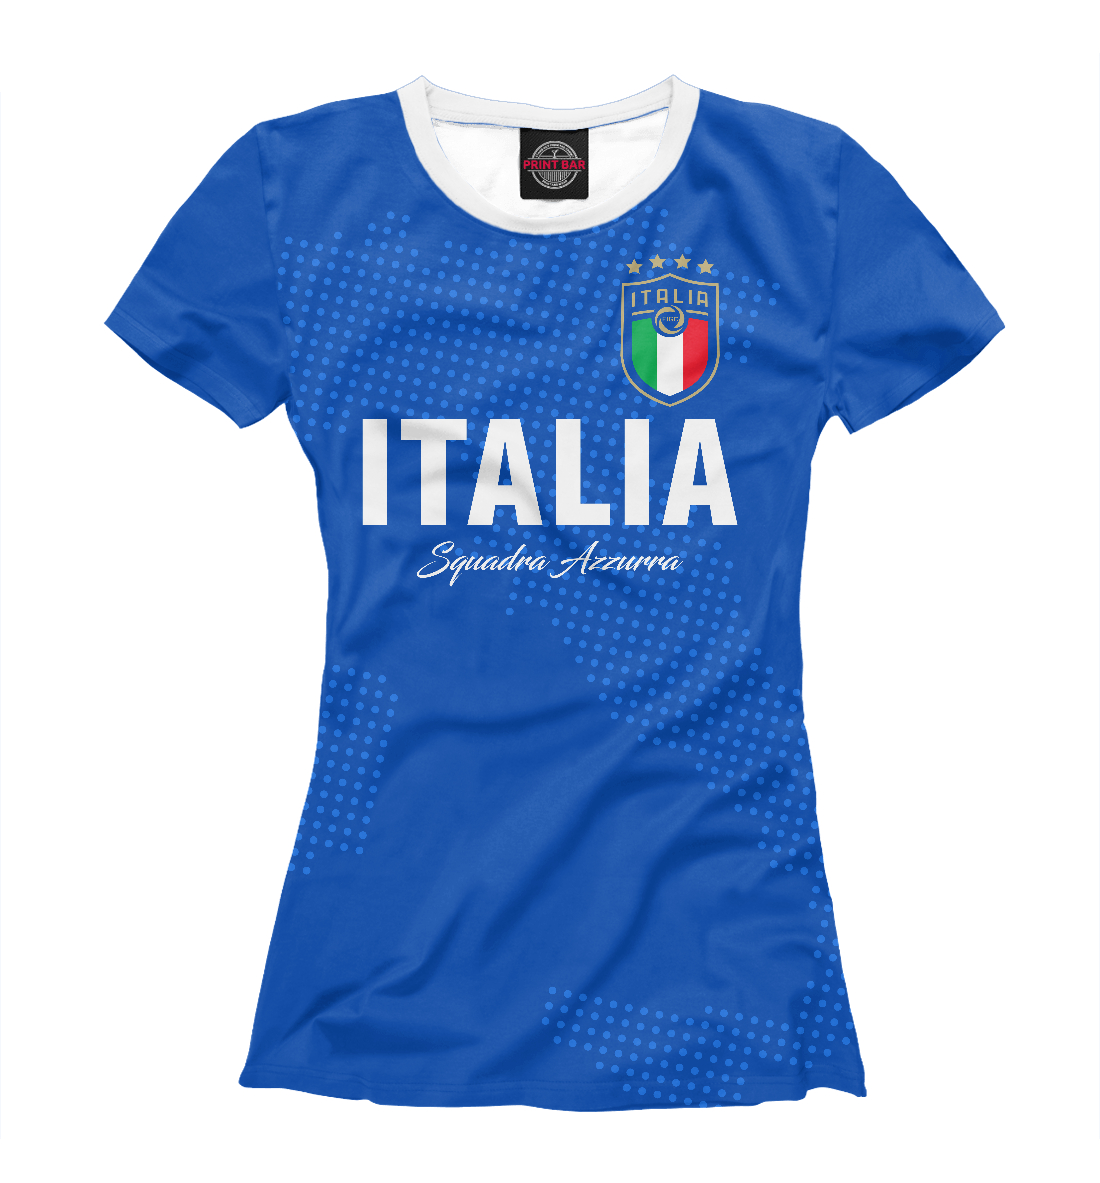 Футболка Италия для женщин, артикул: FNS-186686-fut-1mp